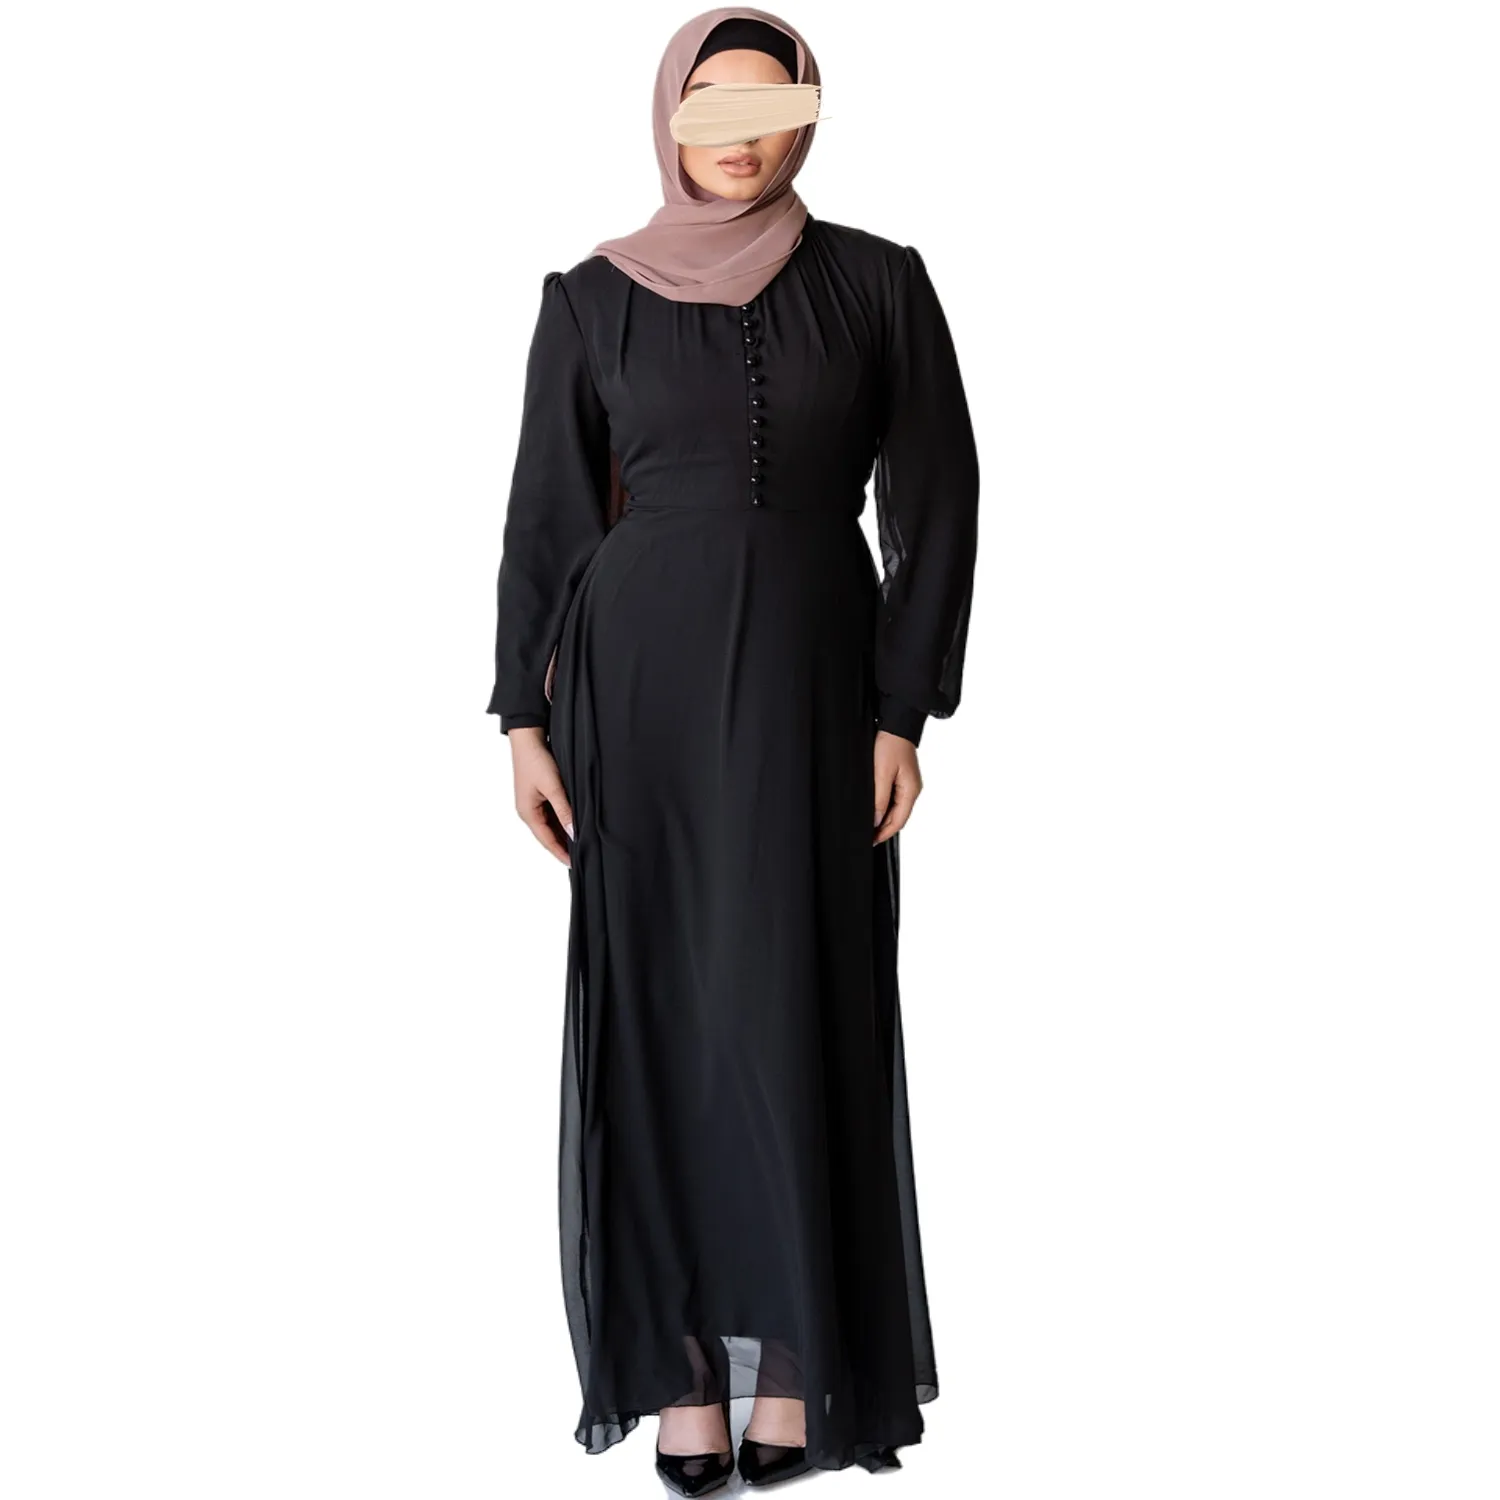 SIPO Prayer Clothes For Muslim Women Praying Hijabs Islamic Abaya Niqab Burka Hijab Face Cover Clothing Muslim Dress Islam